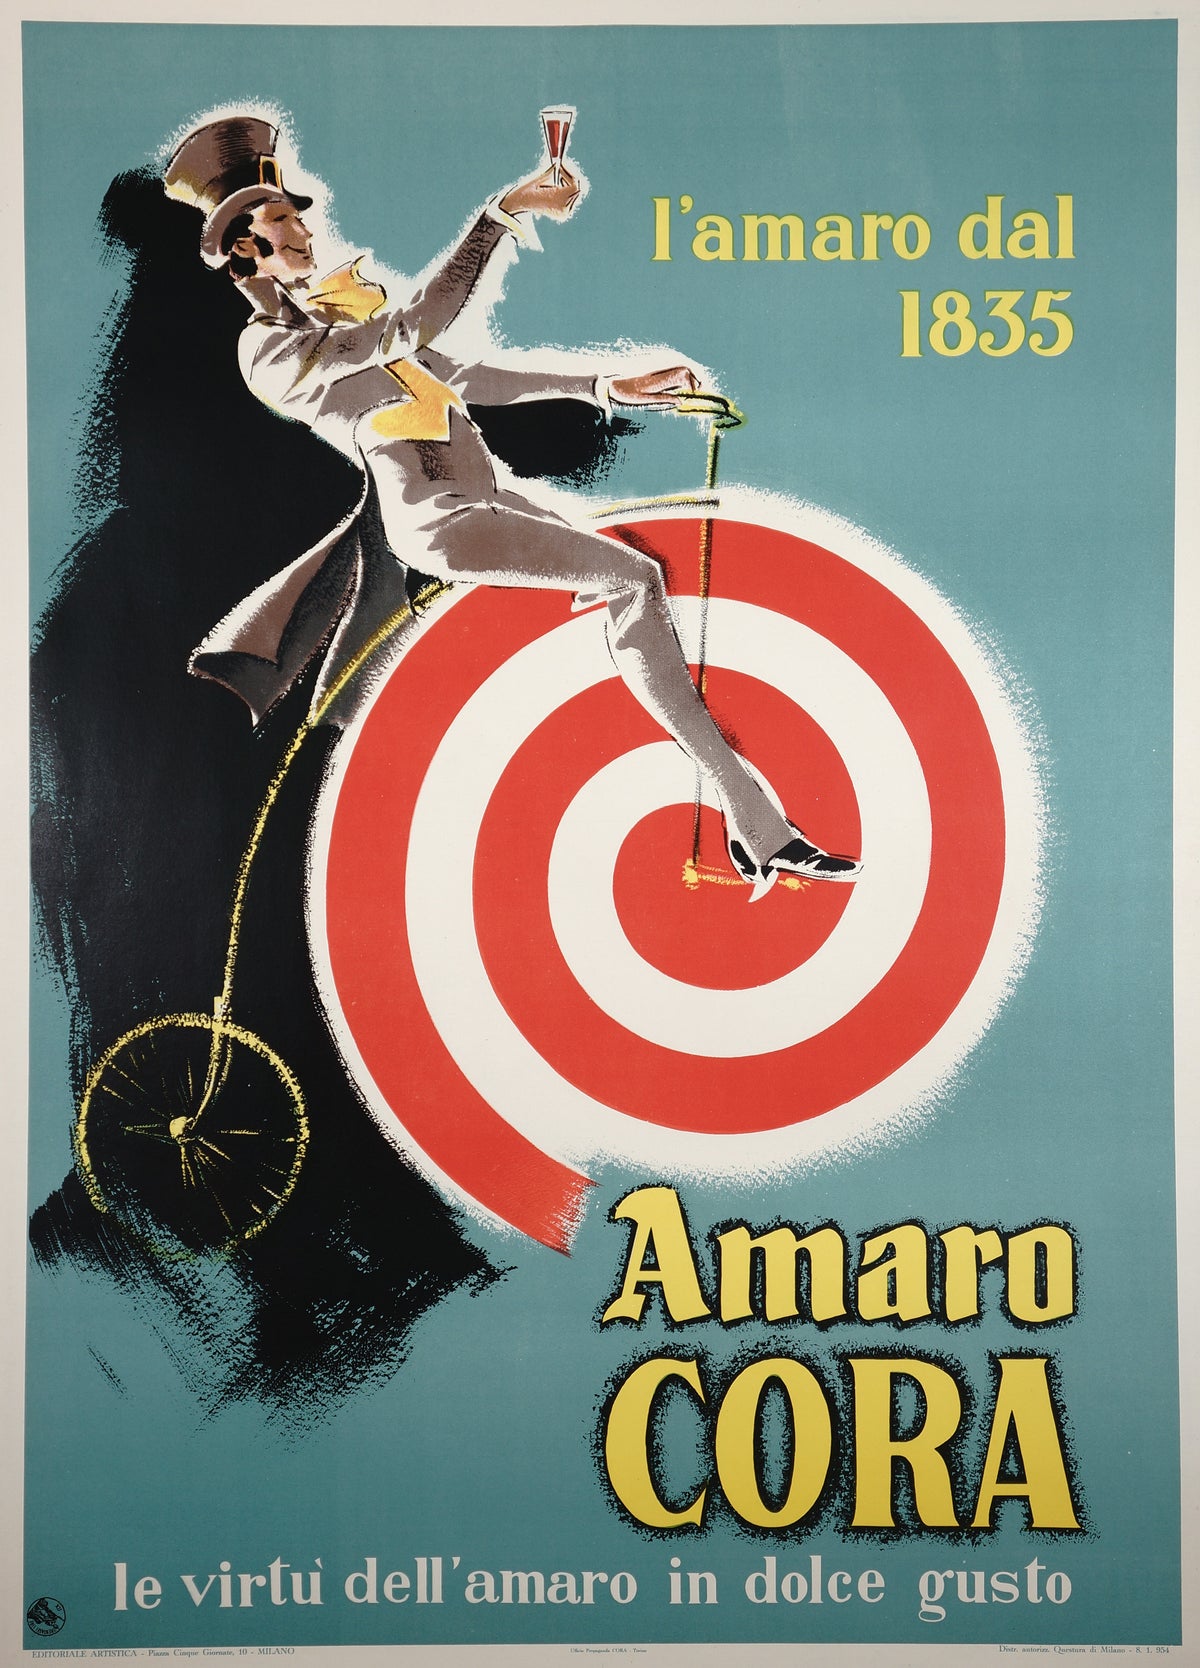 Amaro Cora - Authentic Vintage Poster